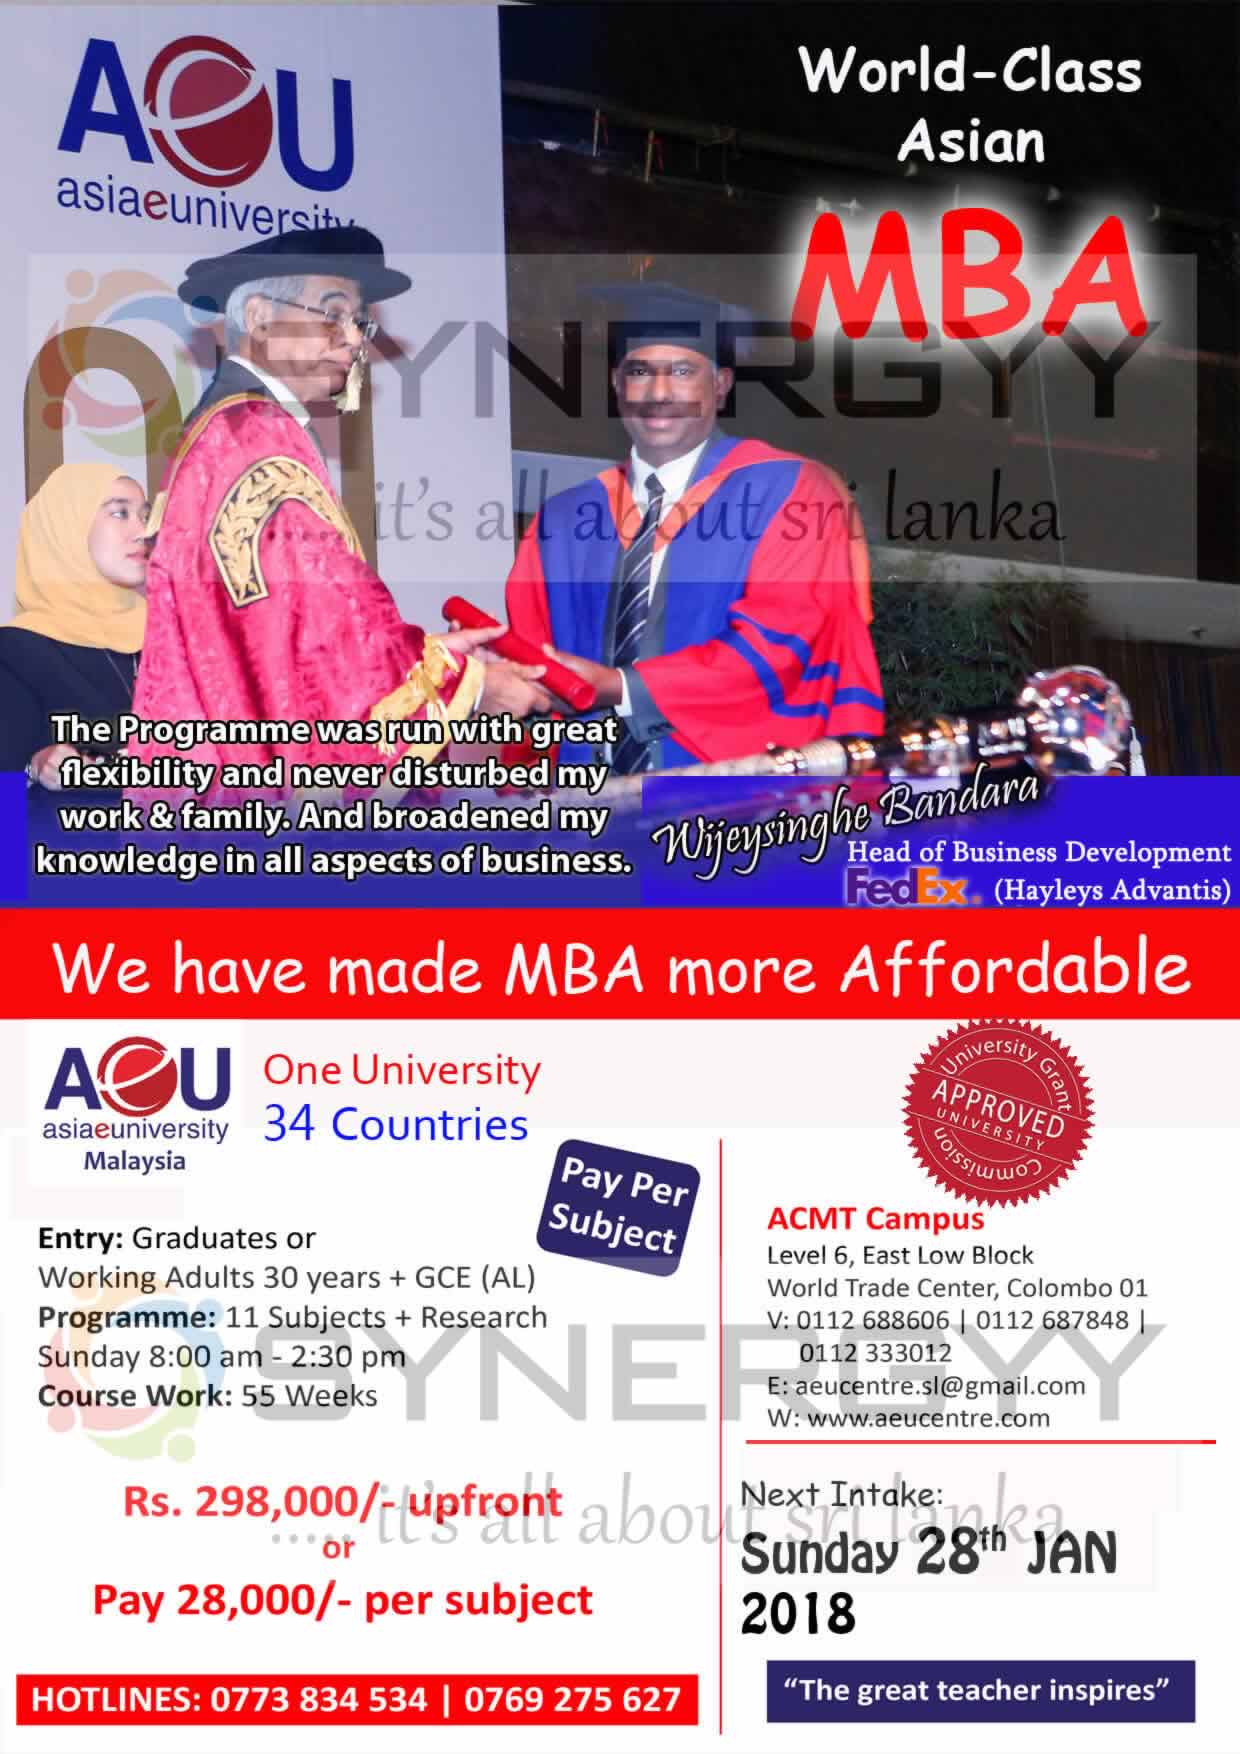 Asia e University MBA Programme by ACMT Campus Sri Lanka